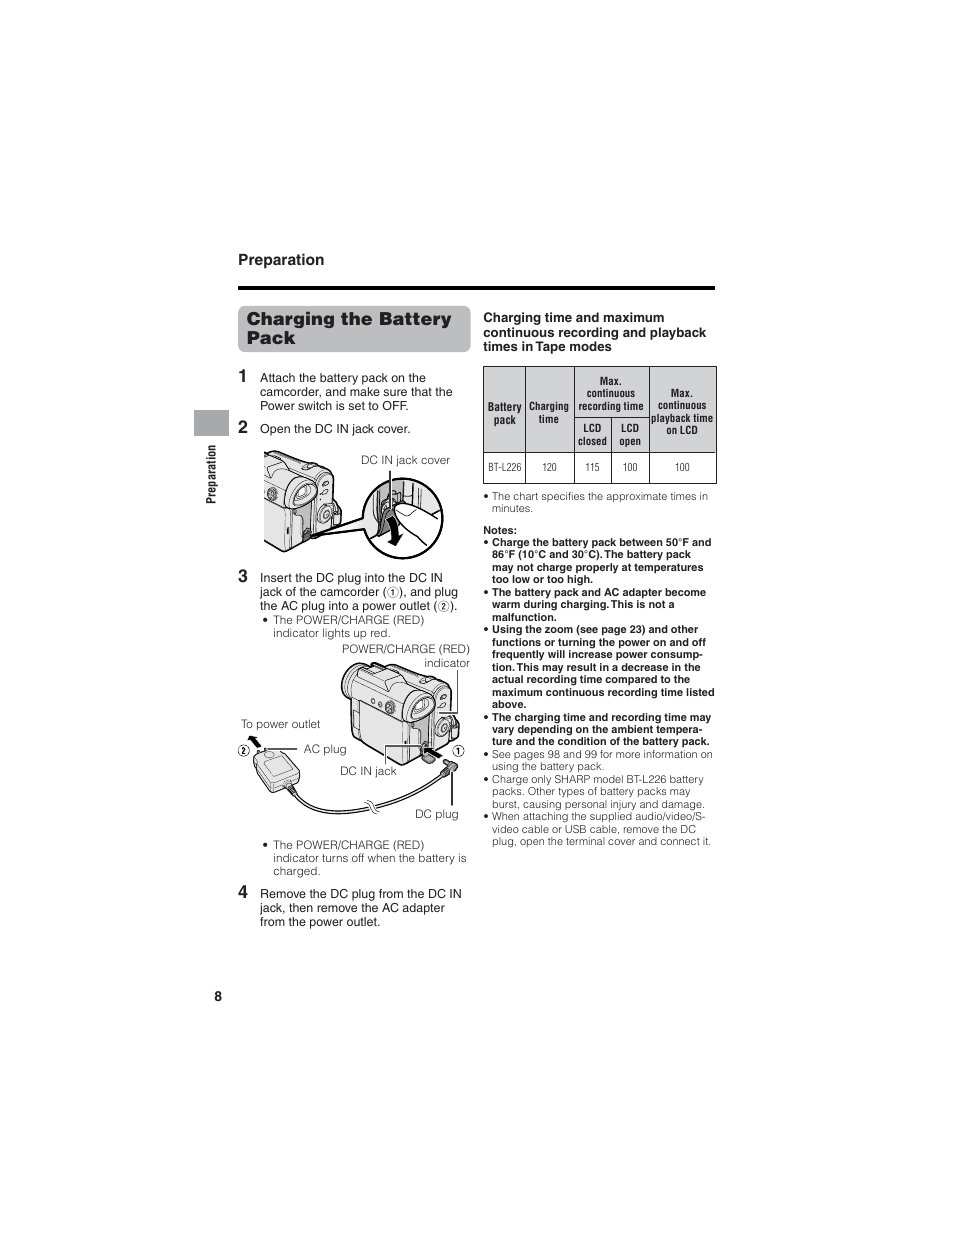 Charging the battery pack 1, Preparation | Sharp VL-Z7U User Manual | Page 22 / 140